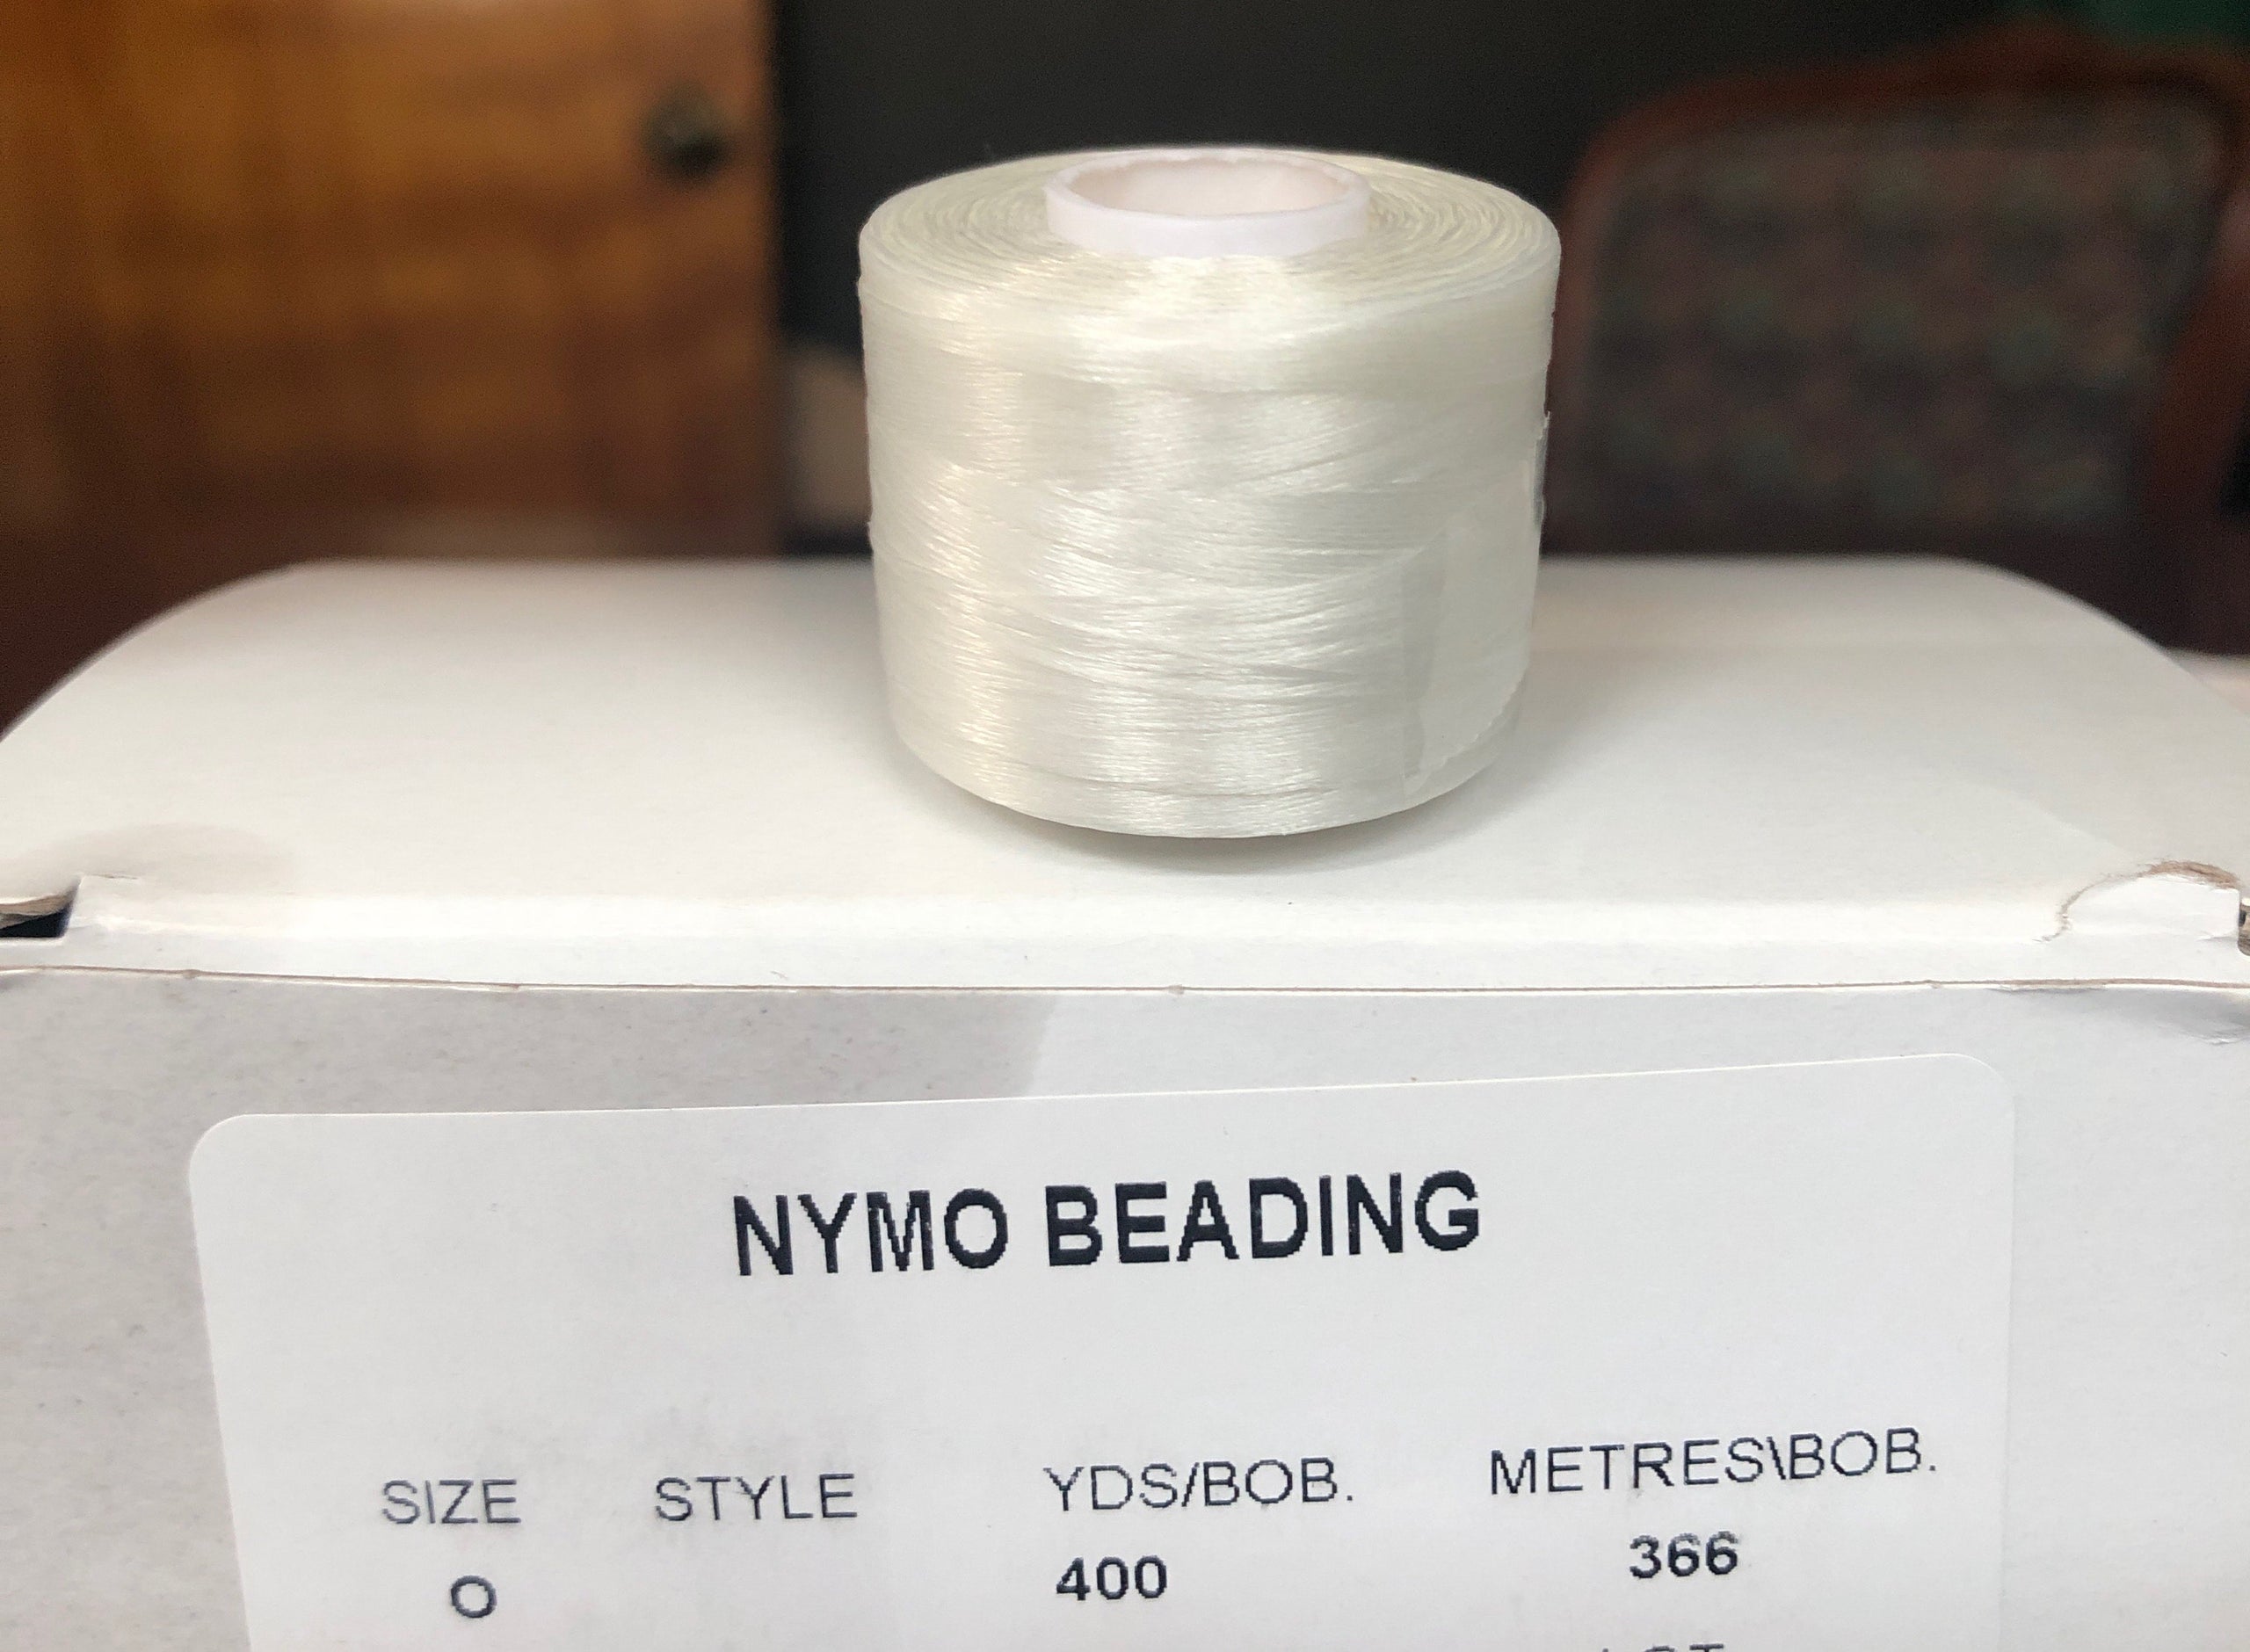 Nymo Nylon Thread Pink Size D (58.5 meters)